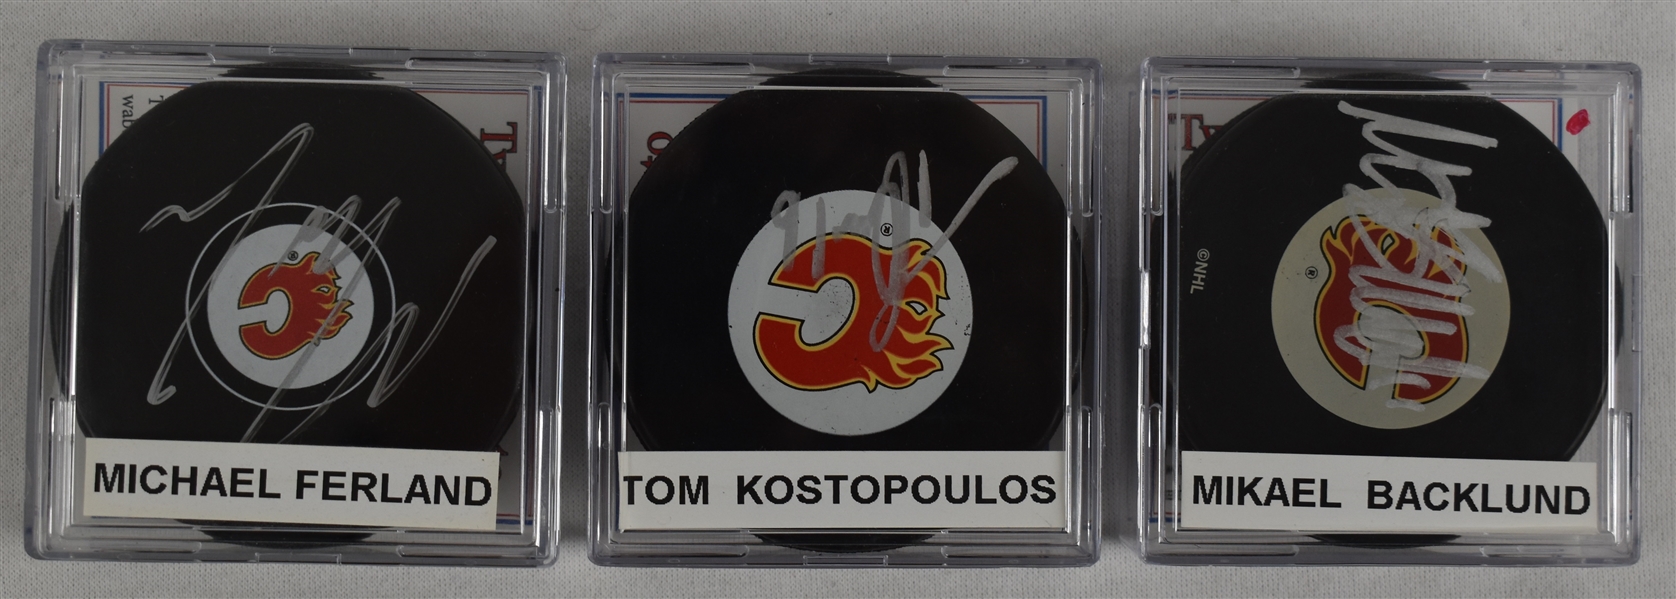 Backlund Ferland & Kostopoulos Lot of 3 Autographed Hockey Pucks w/Case